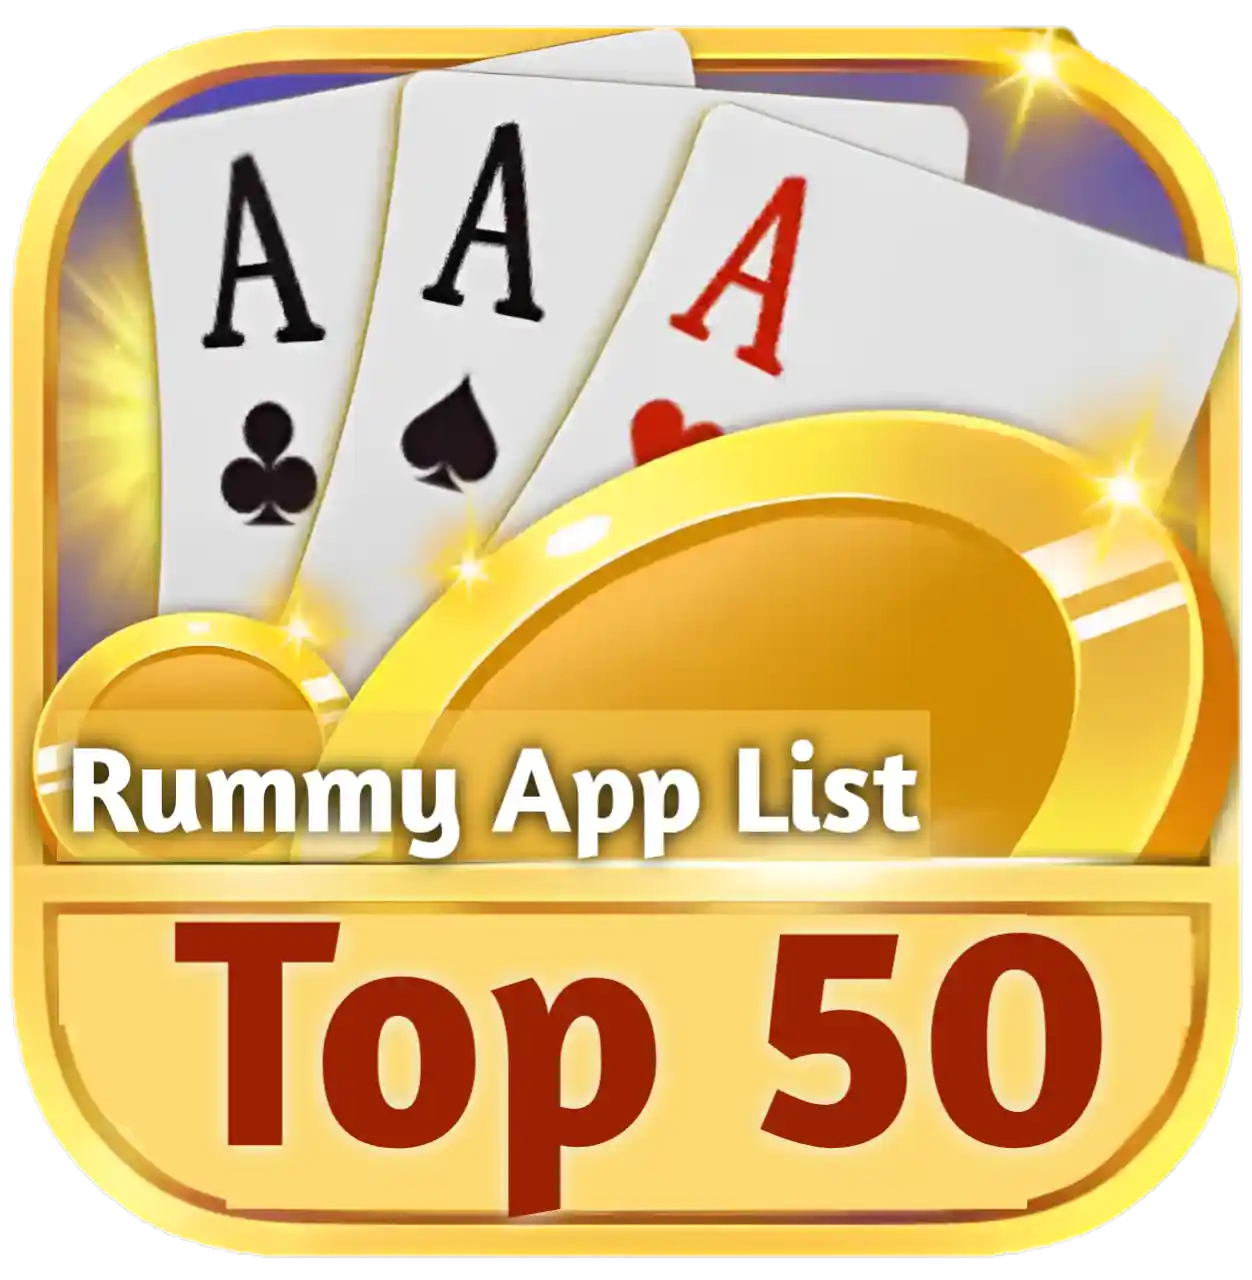 Top 50 Rummy Apk List - Super Rummy App List (Super Rummy App)